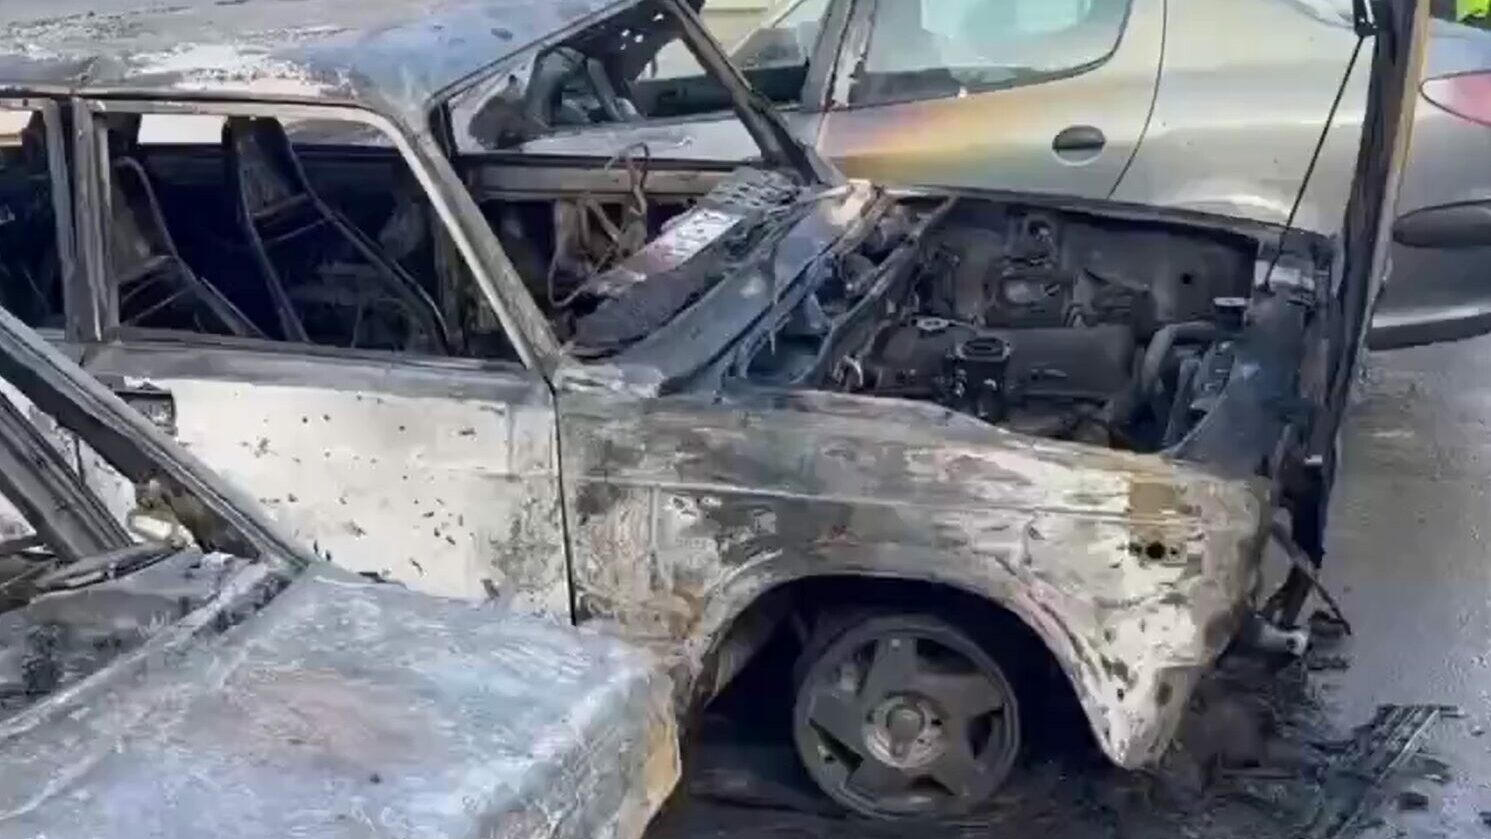 Car Blast Kills One In Syrian Capital Upscale Neighborhood (Videos)